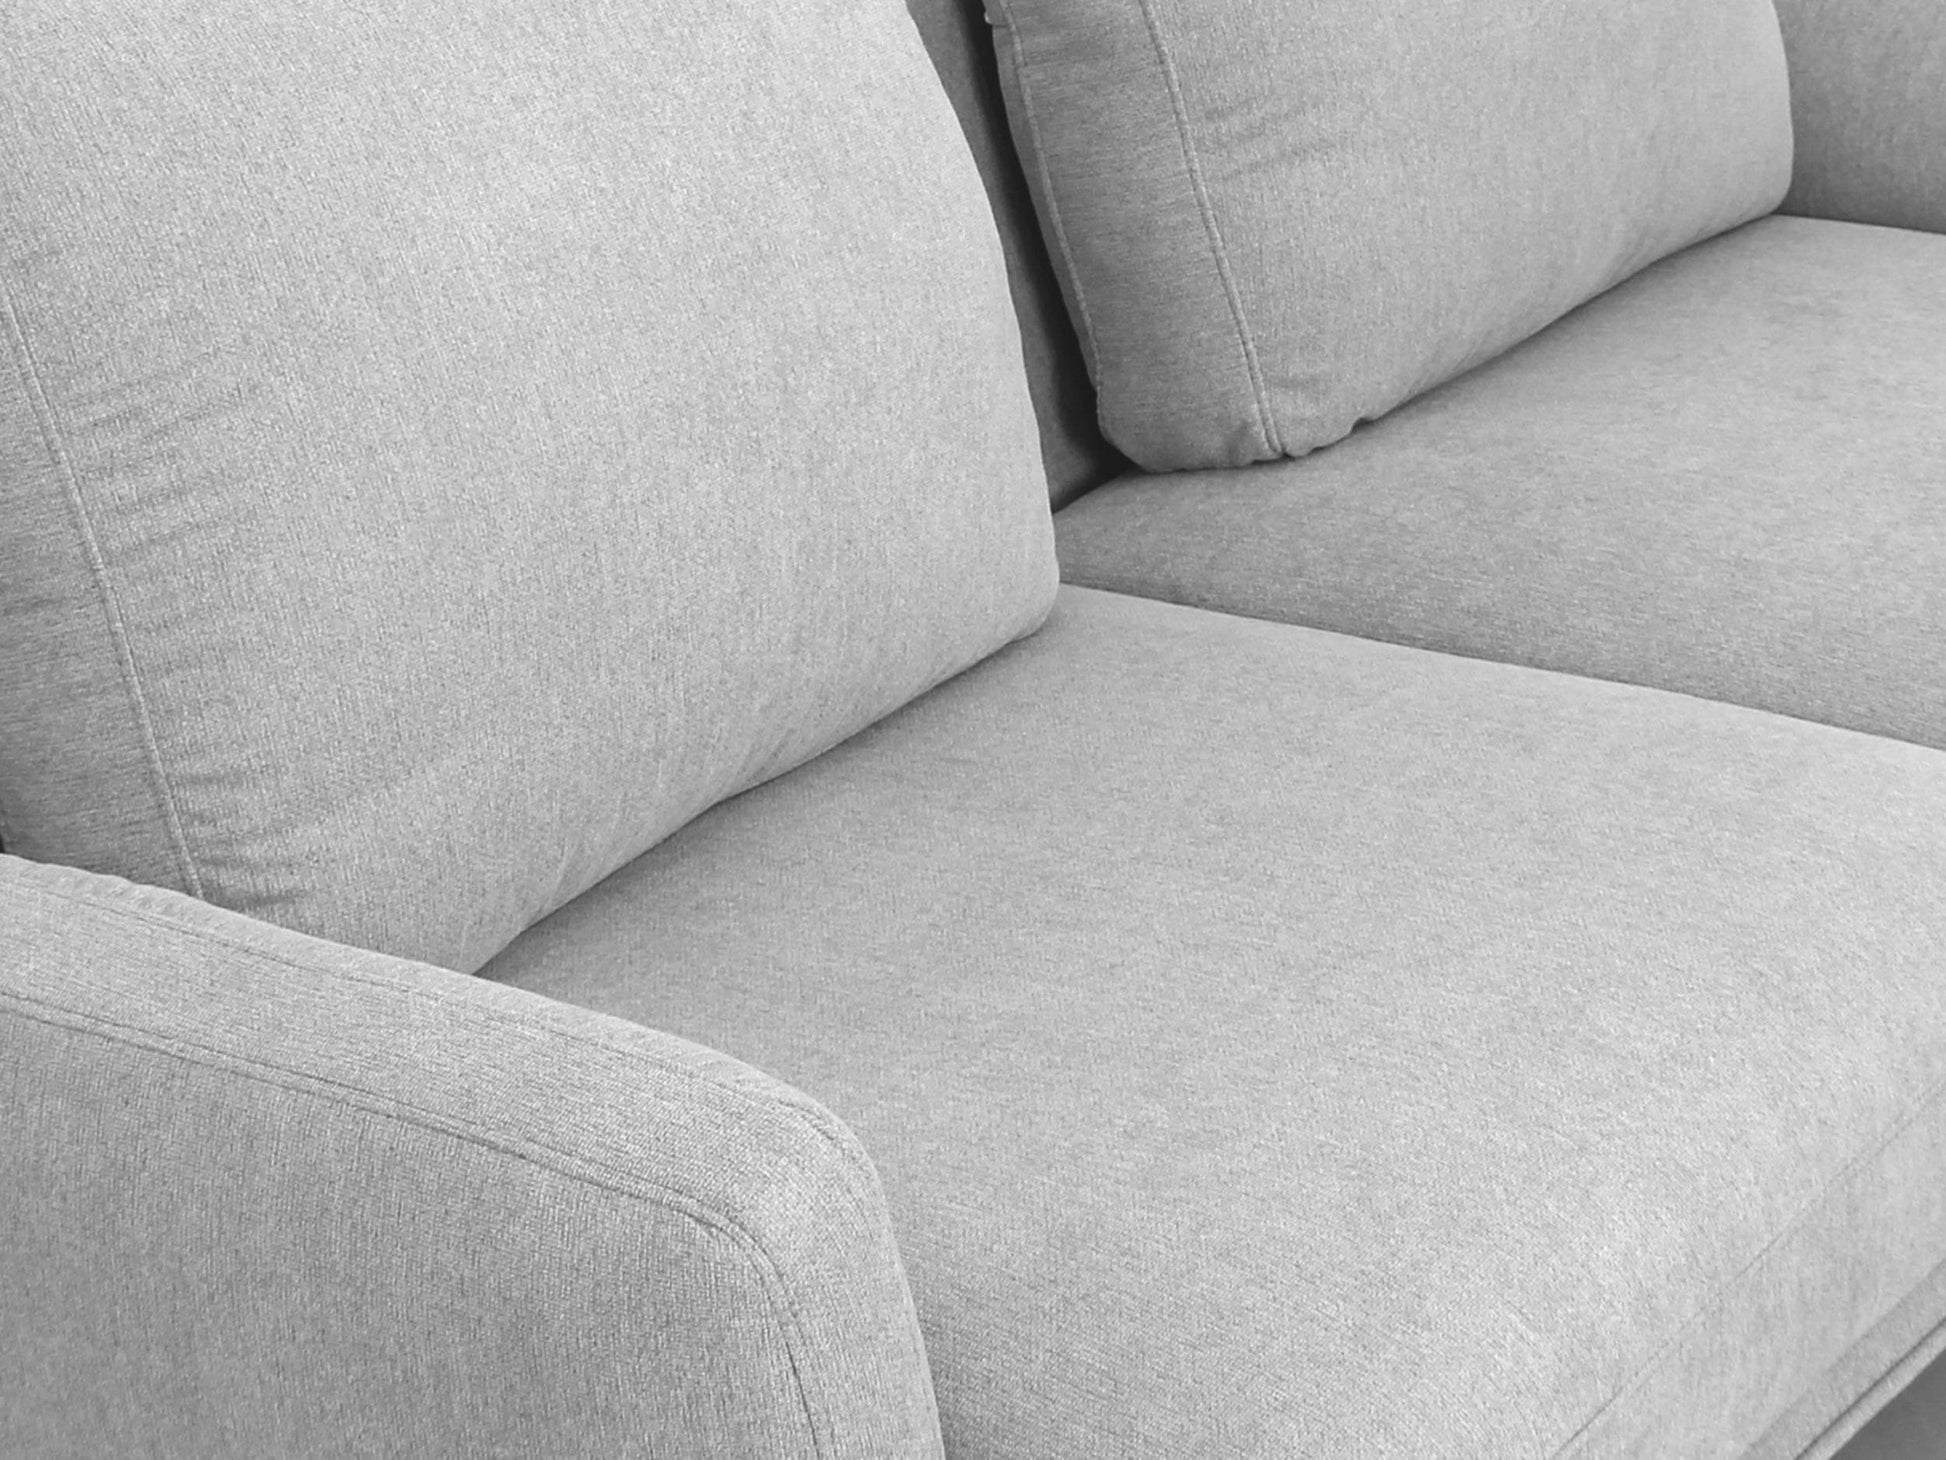 VIG Furniture Divani Casa Dolly Light Grey Fabric Sofa